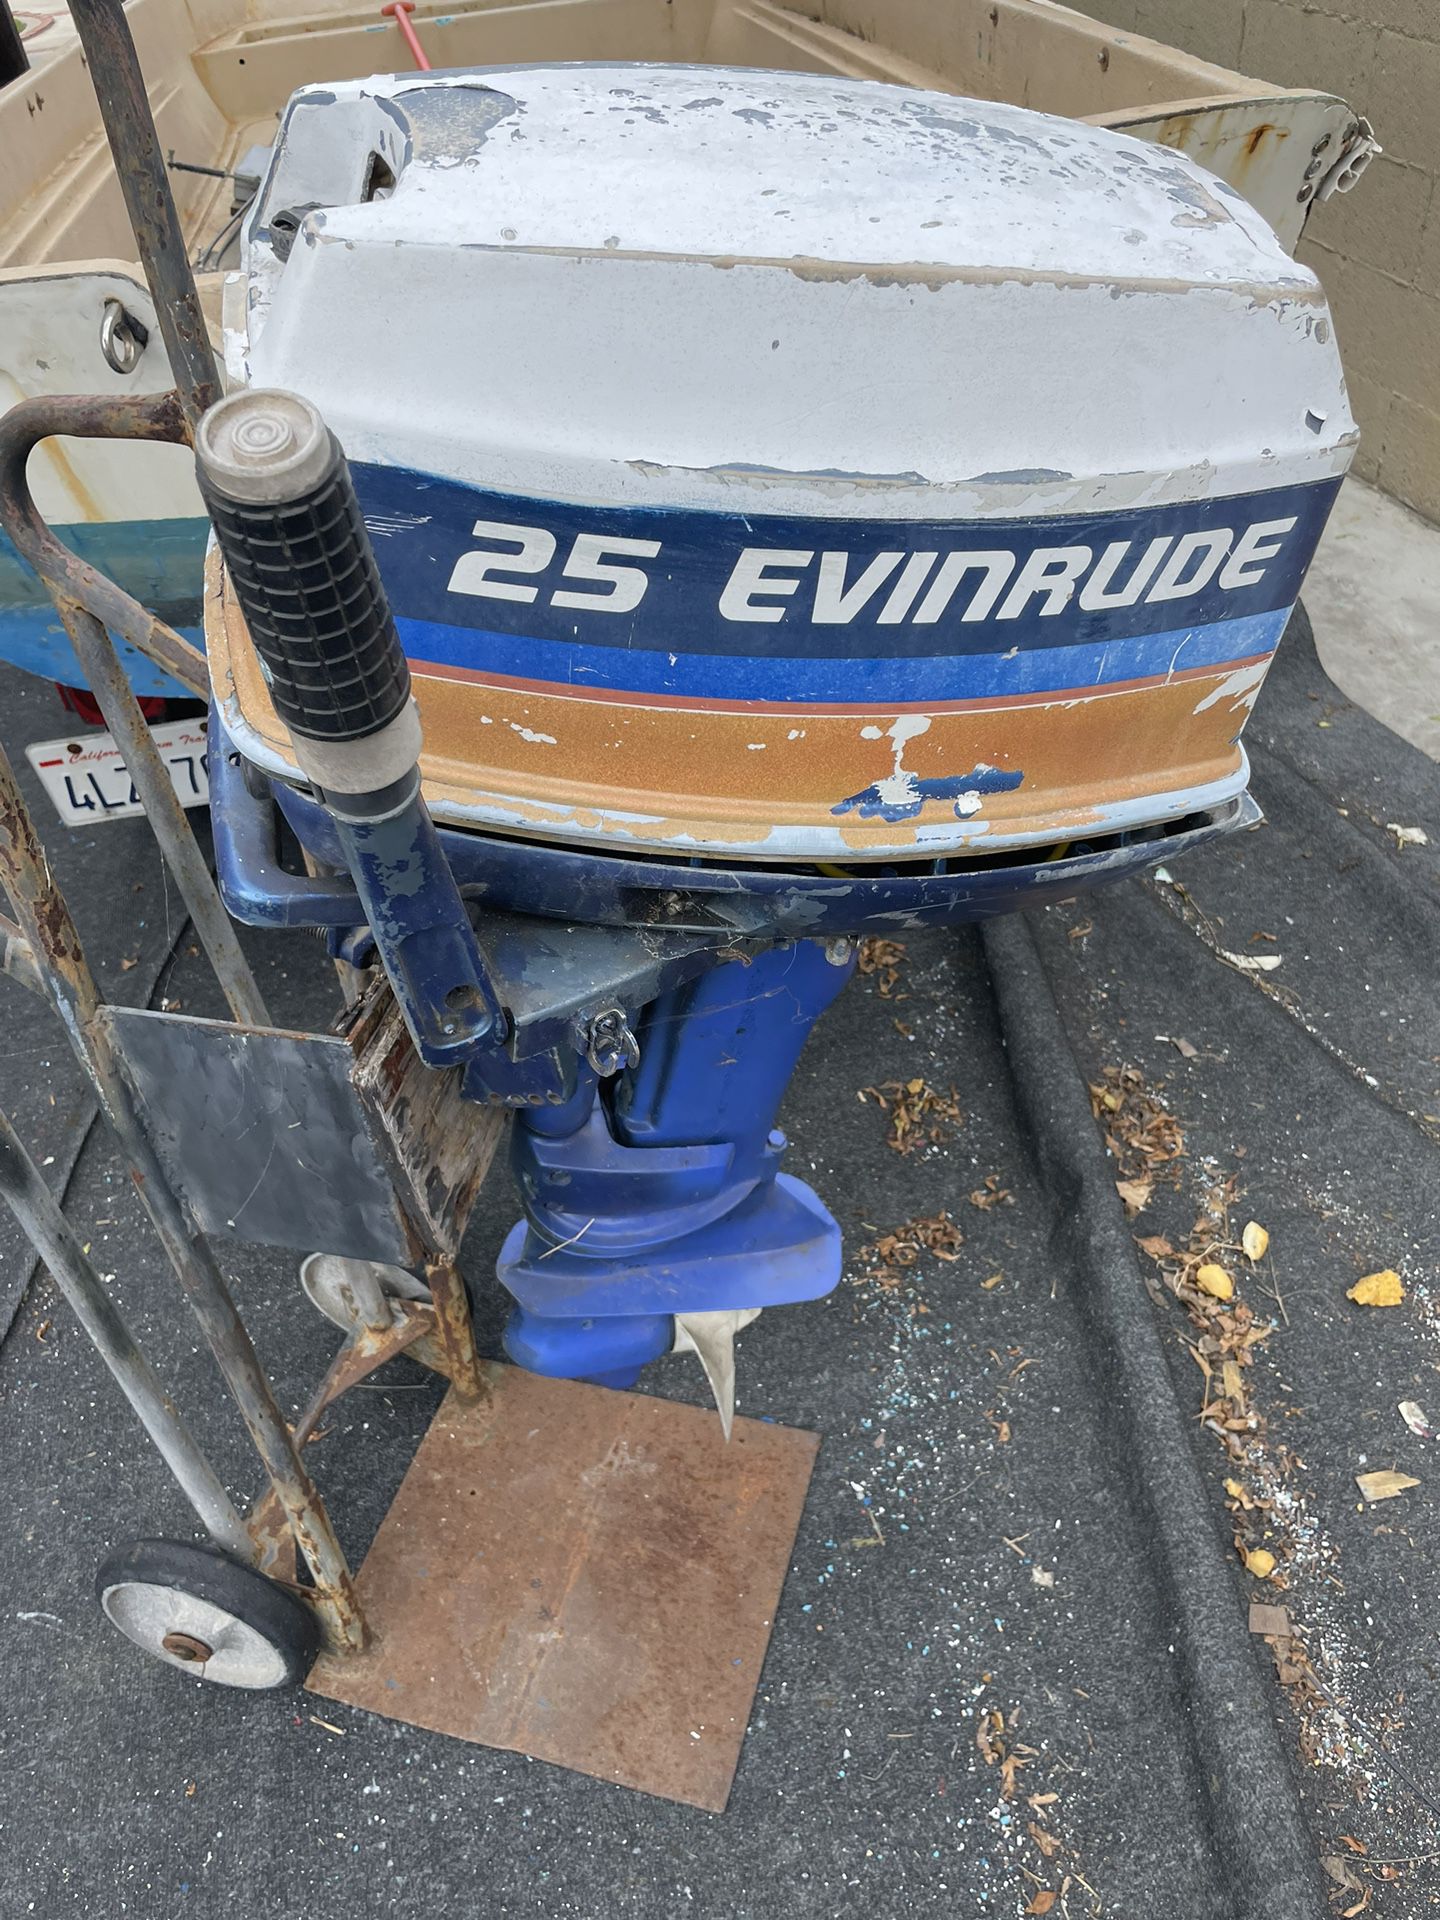 25 Evinrude 2 Stroke Outboard Boat Motor